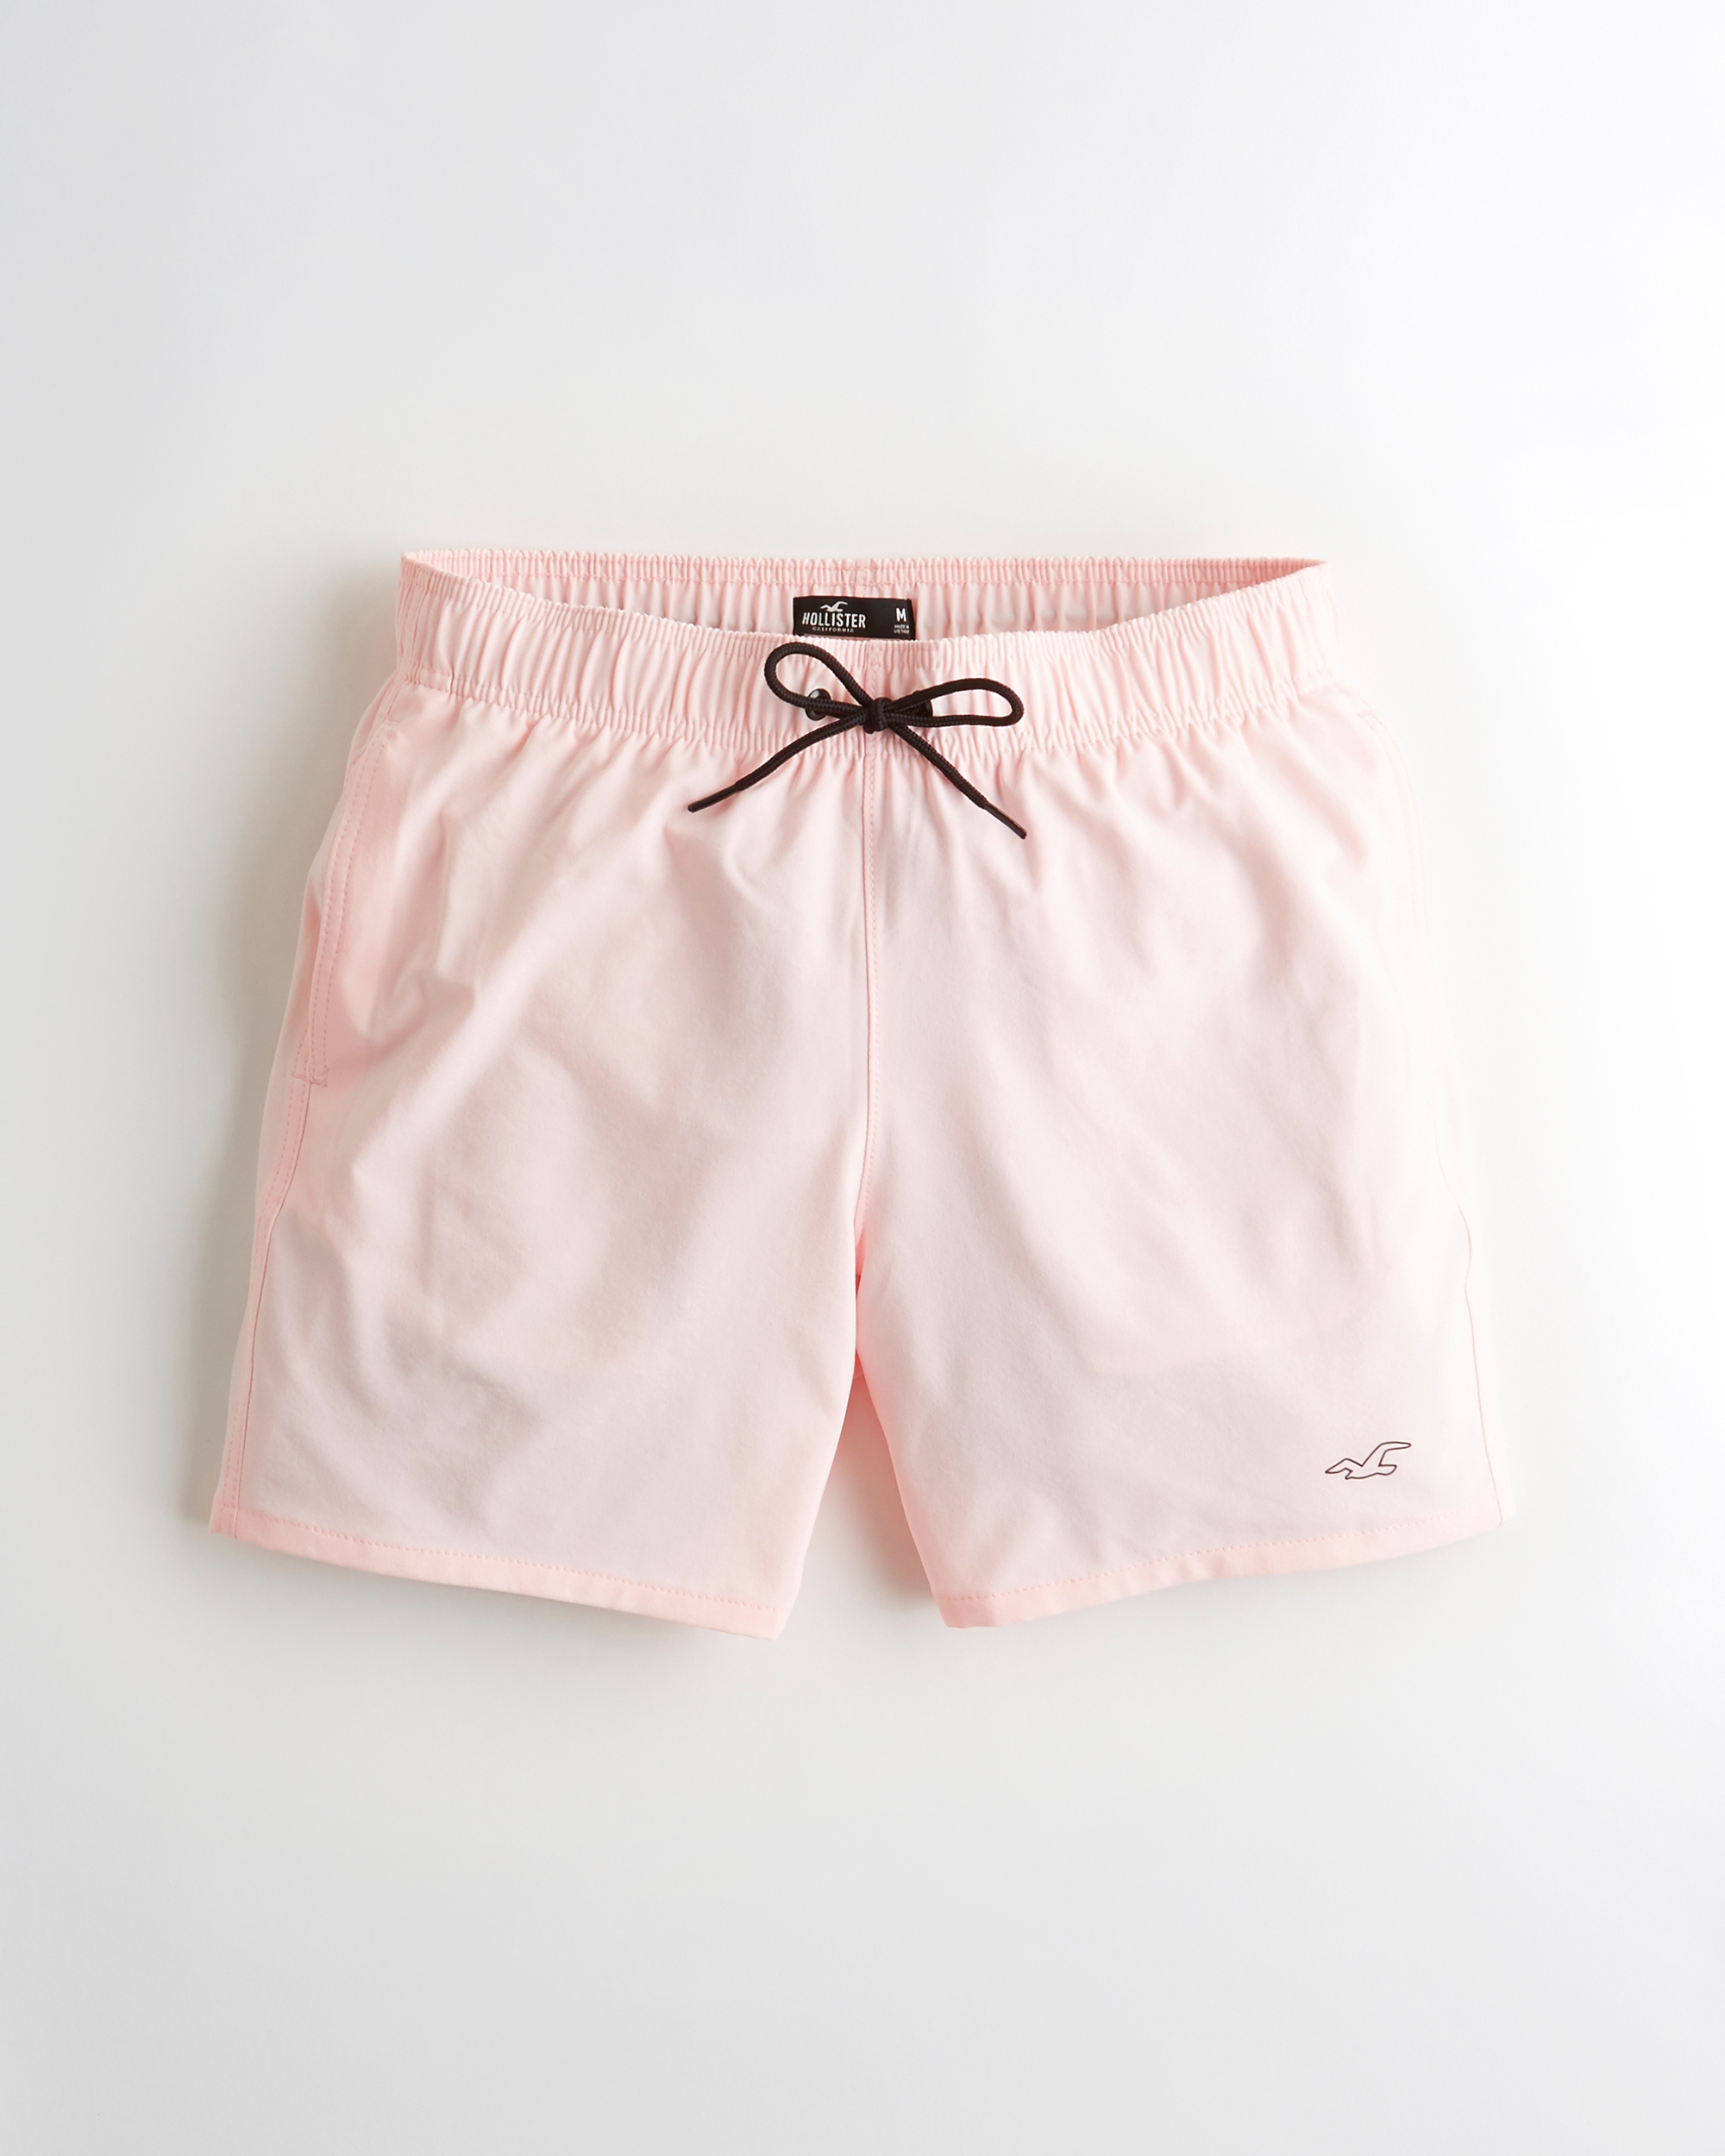 hollister pink swim trunks